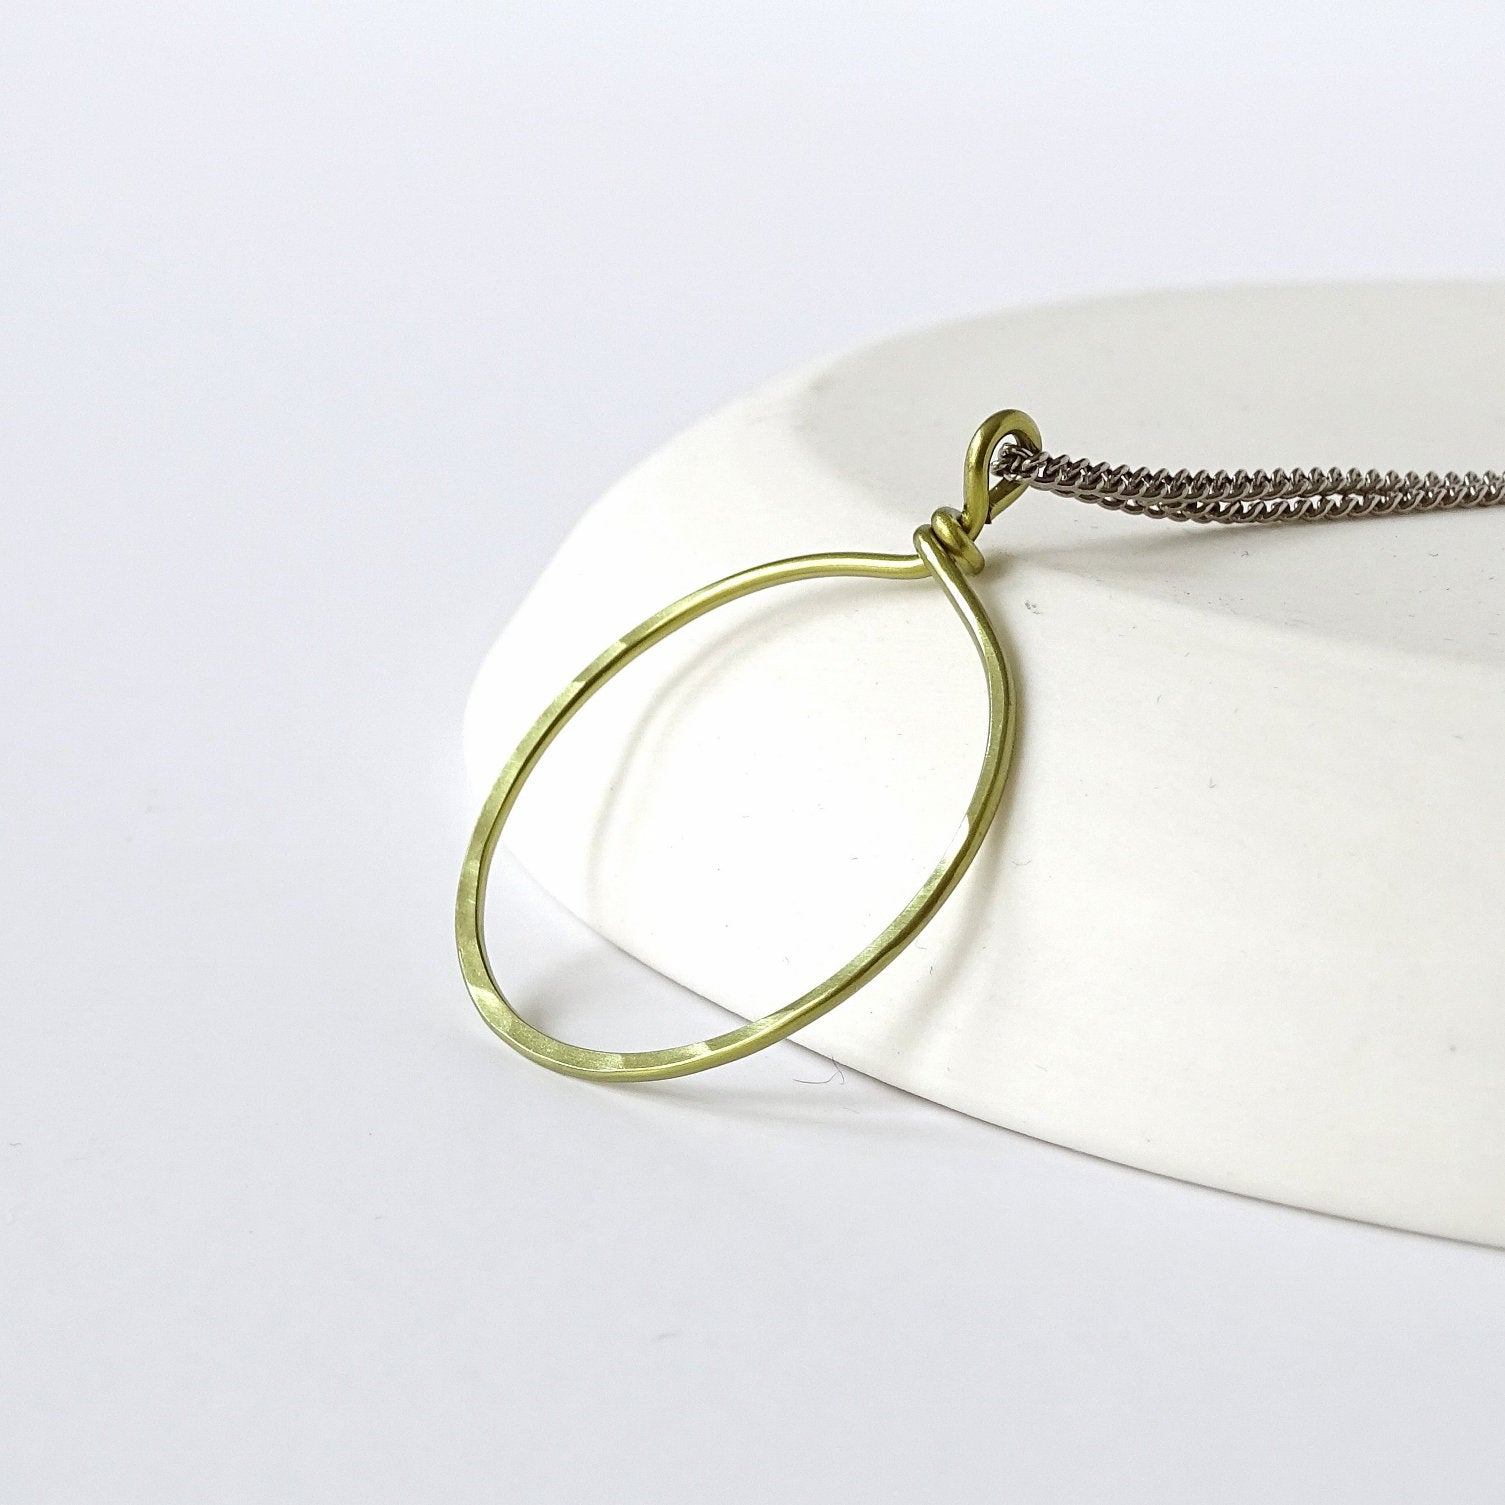 Gold Circle Hoop Titanium Necklace, Hypoallergenic Nickel Free Niobium, Big Hammered Ring Necklace for Sensitive Skin, Simple Loop Pendant